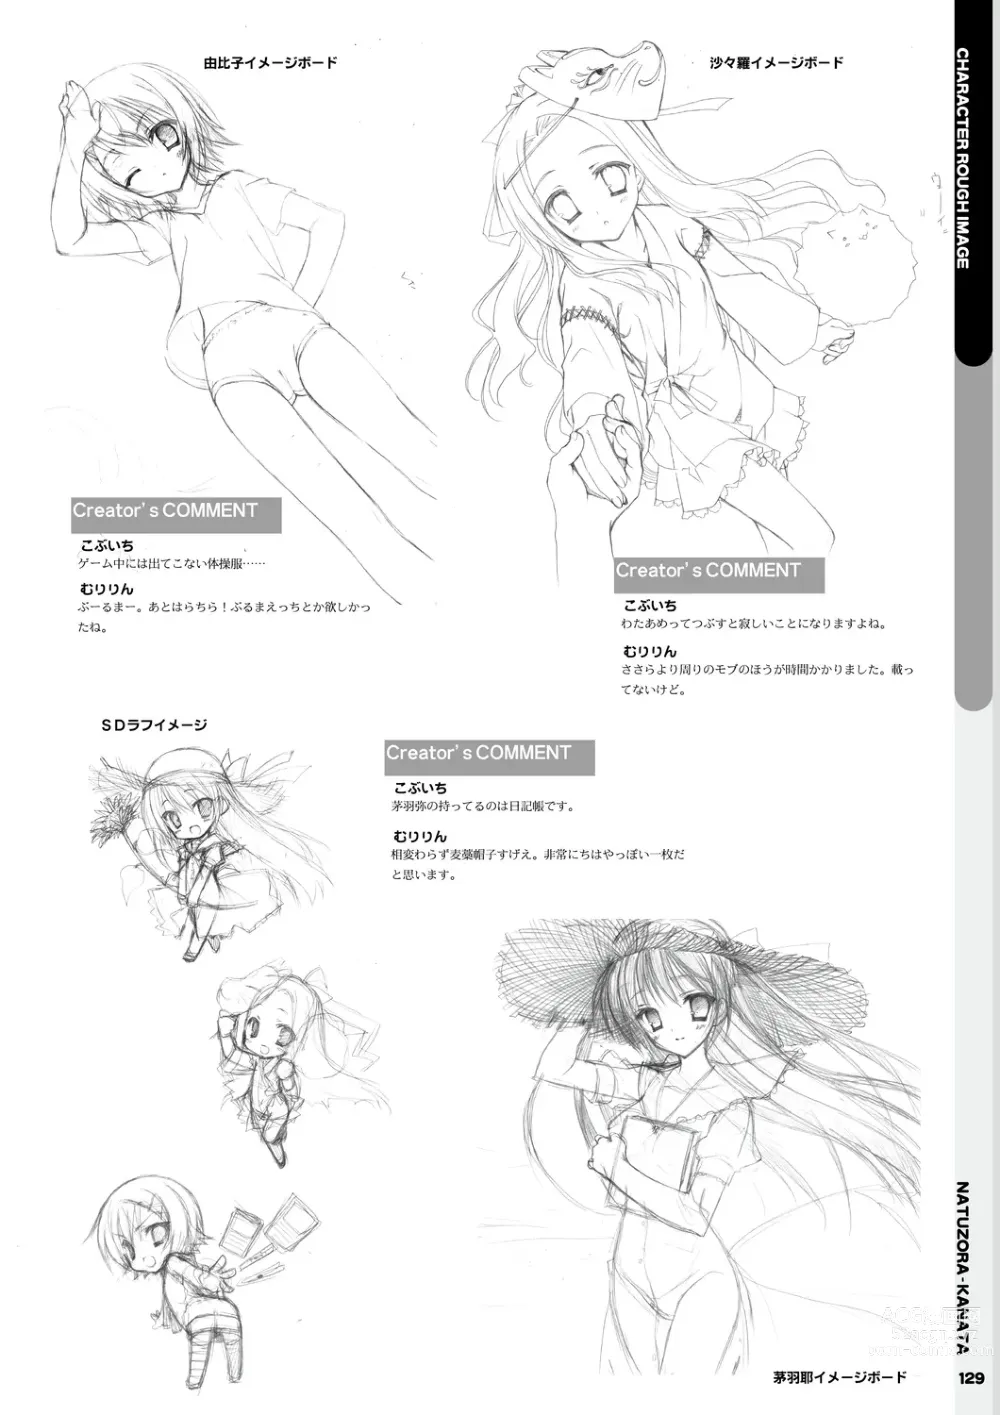 Page 131 of manga Natsuzora Kanata Official Visual Fan Book